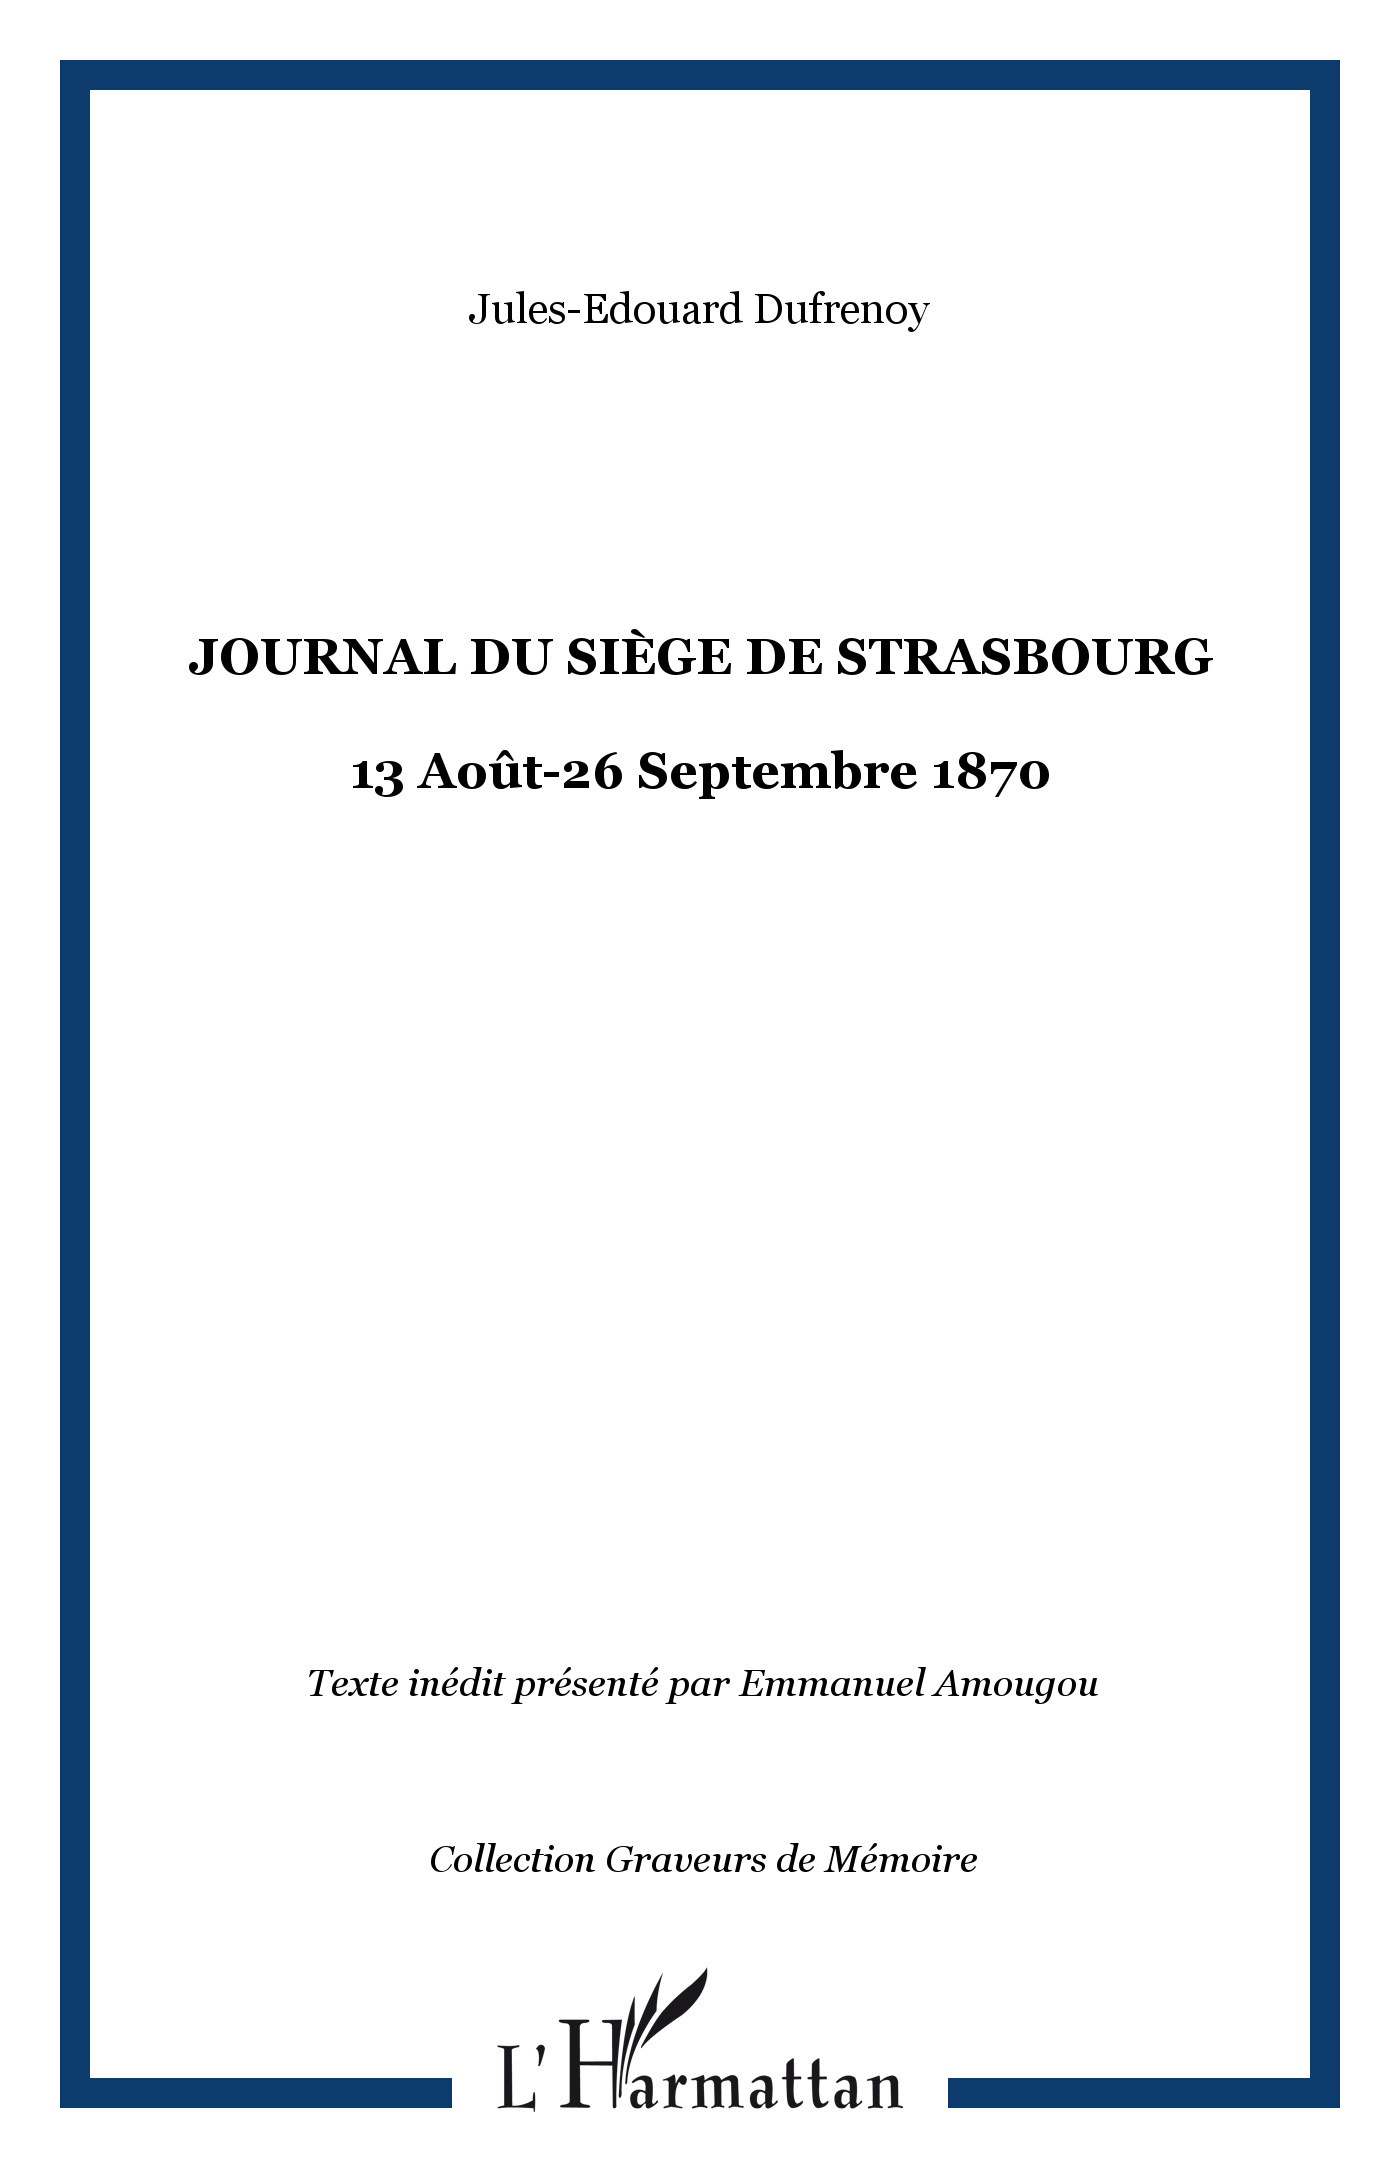 Journal du siège de Strasbourg, 13 Août-26 Septembre 1870 (9782747560689-front-cover)